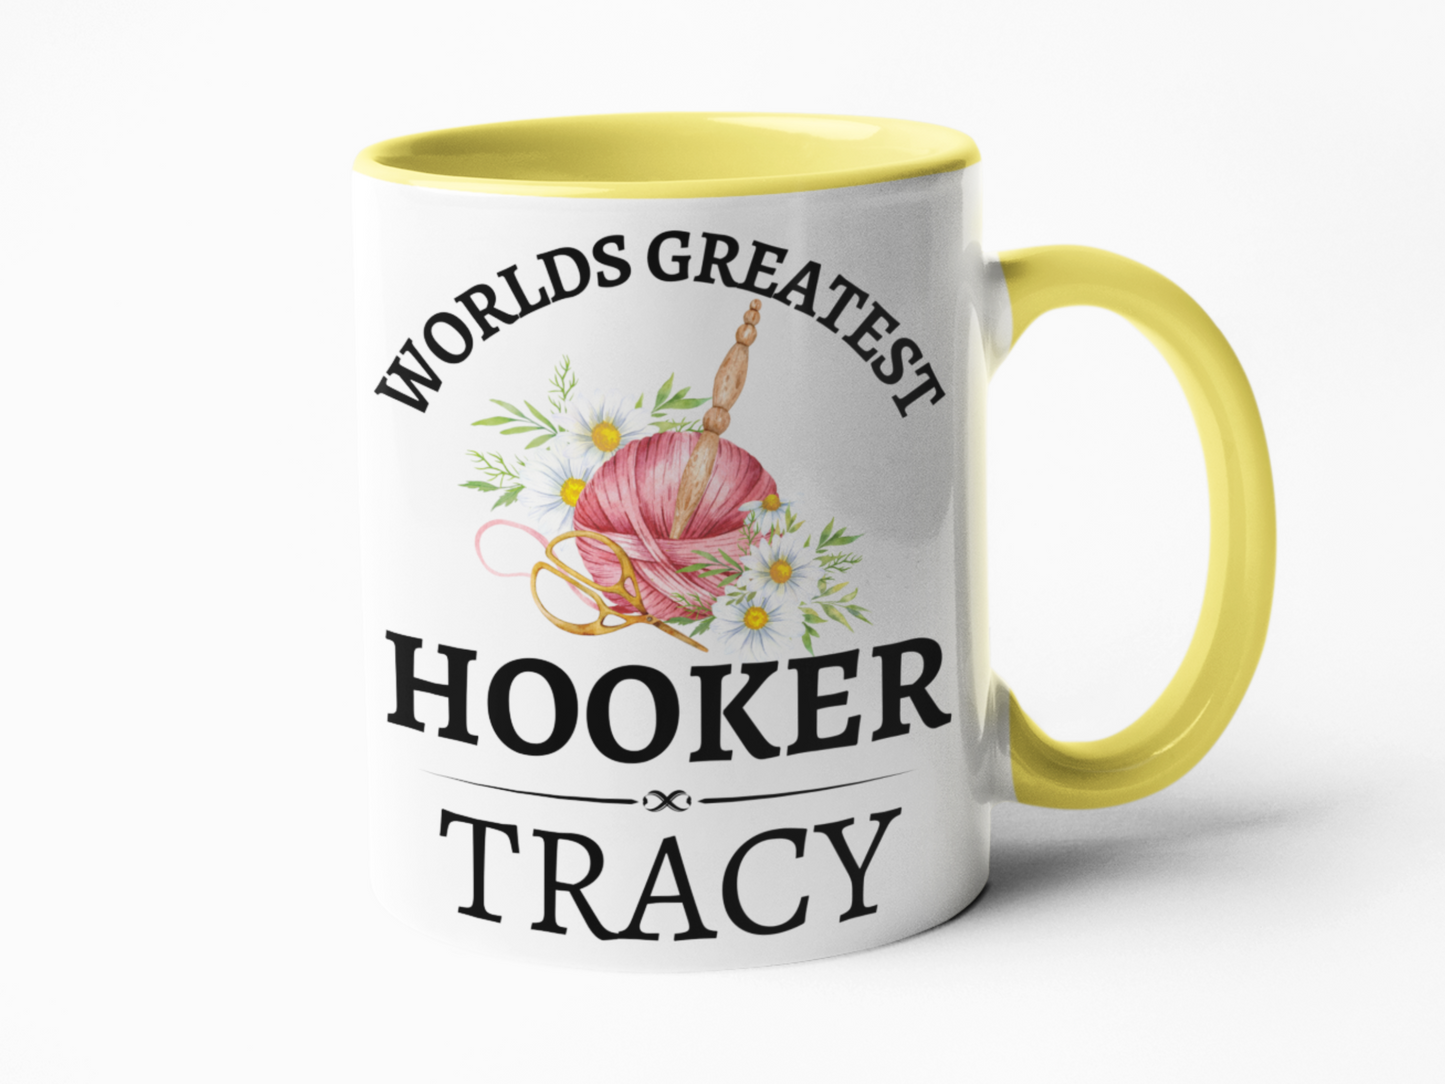 World's greatest hooker crochet themed coffee mug